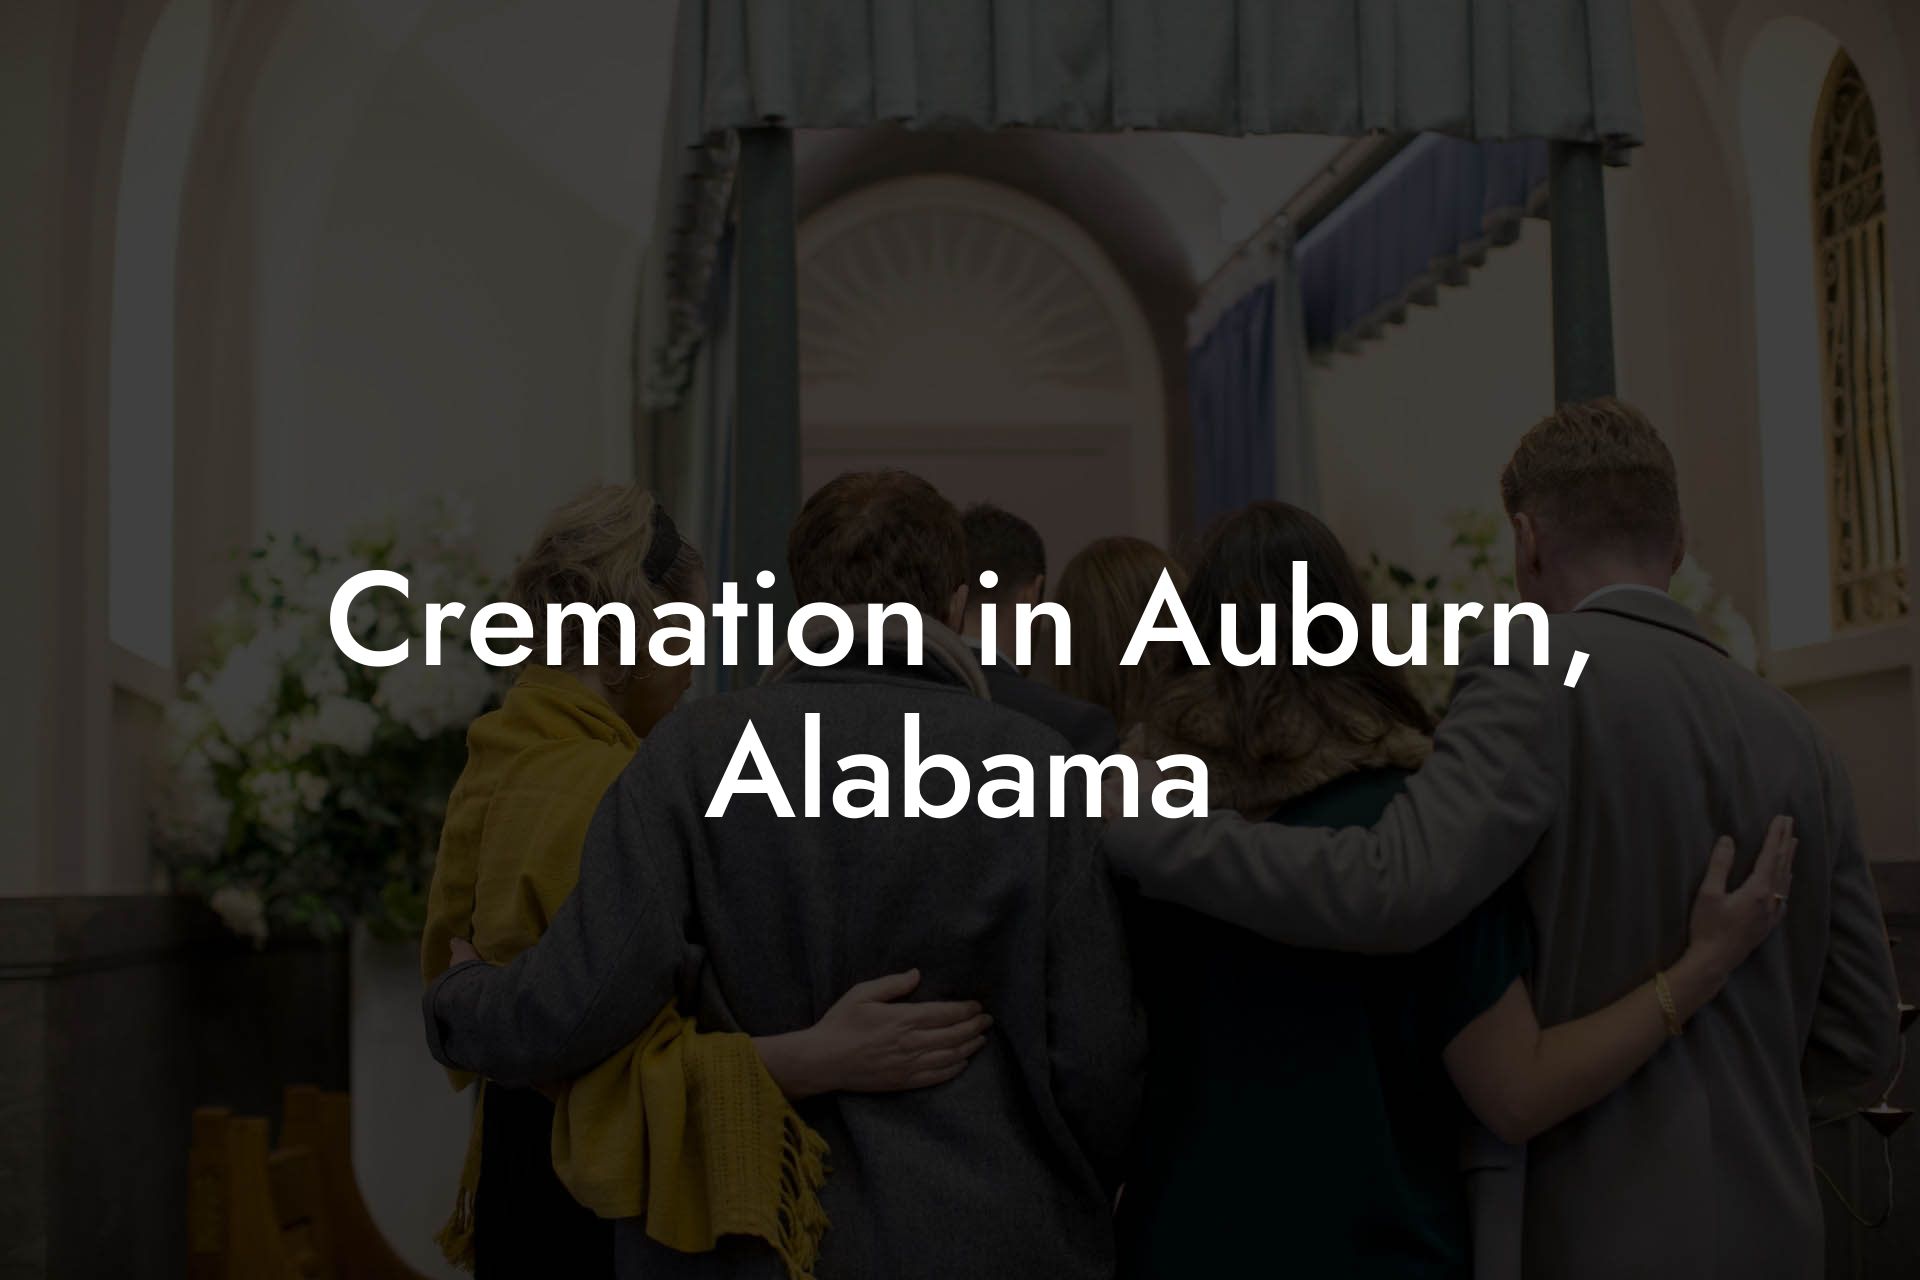 Cremation in Auburn, Alabama